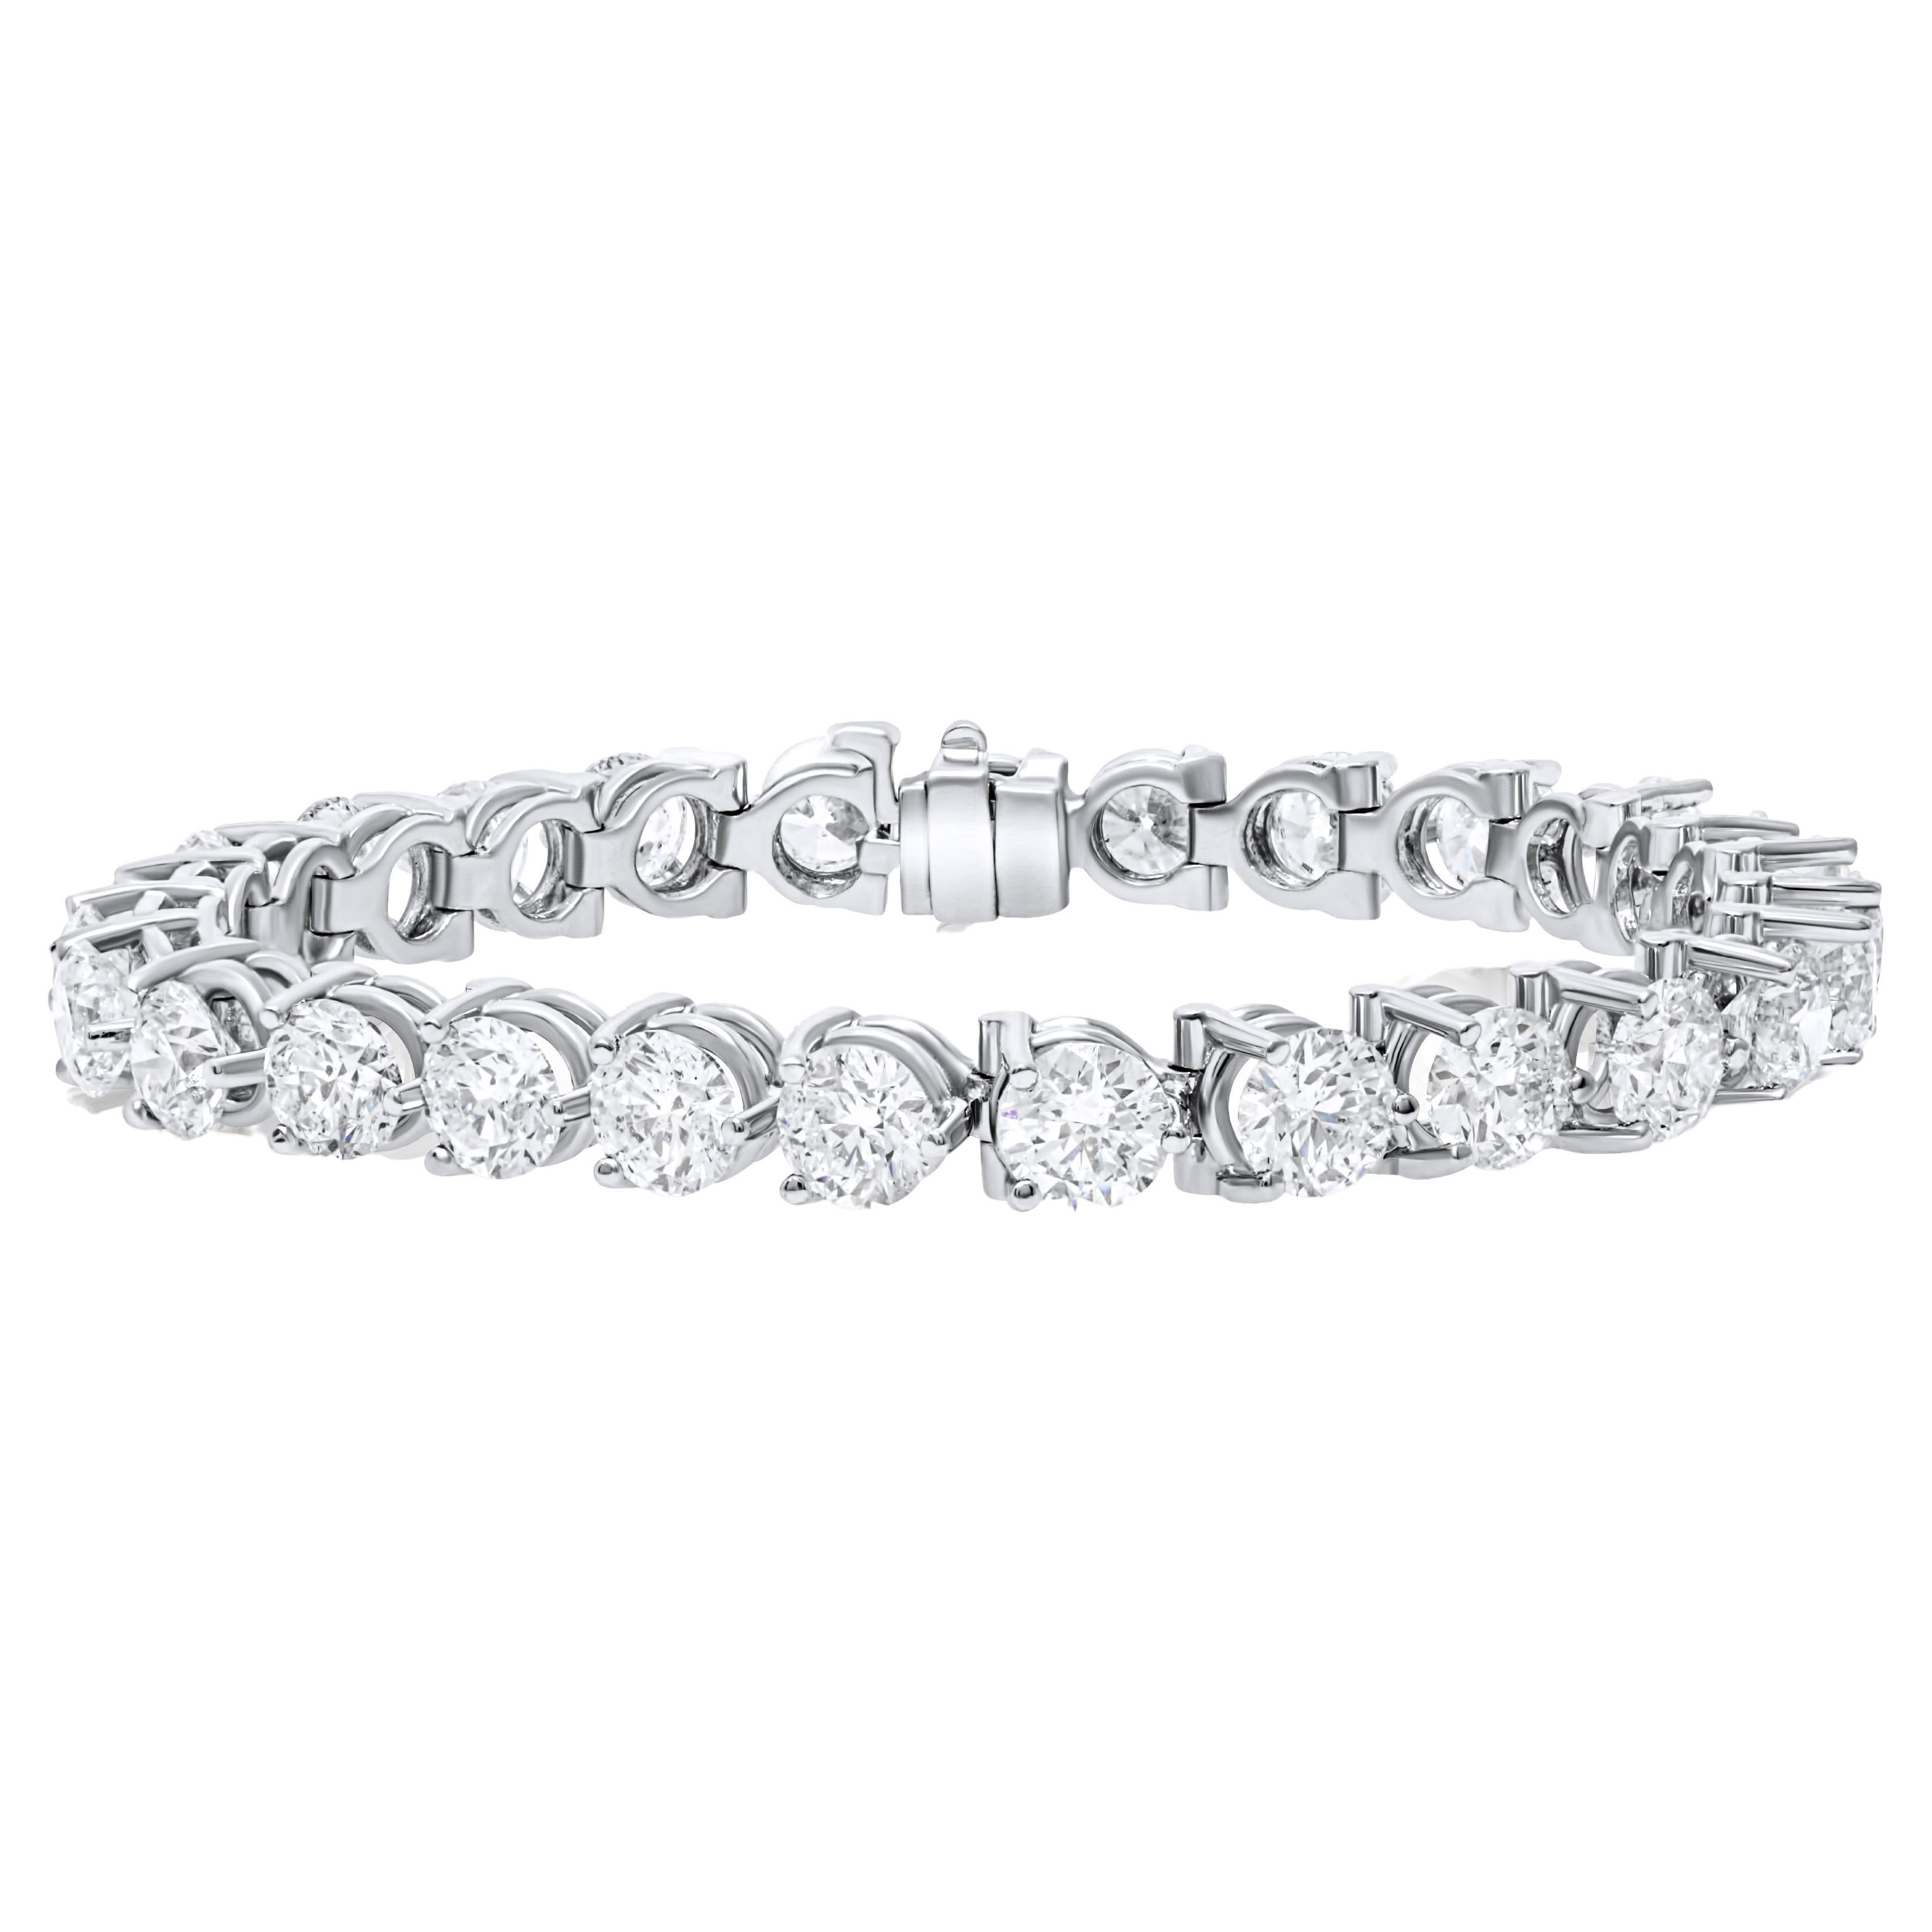 Diana M. Platinum 3 prong diamond tennis bracelet adorned with 19.50 cts For Sale